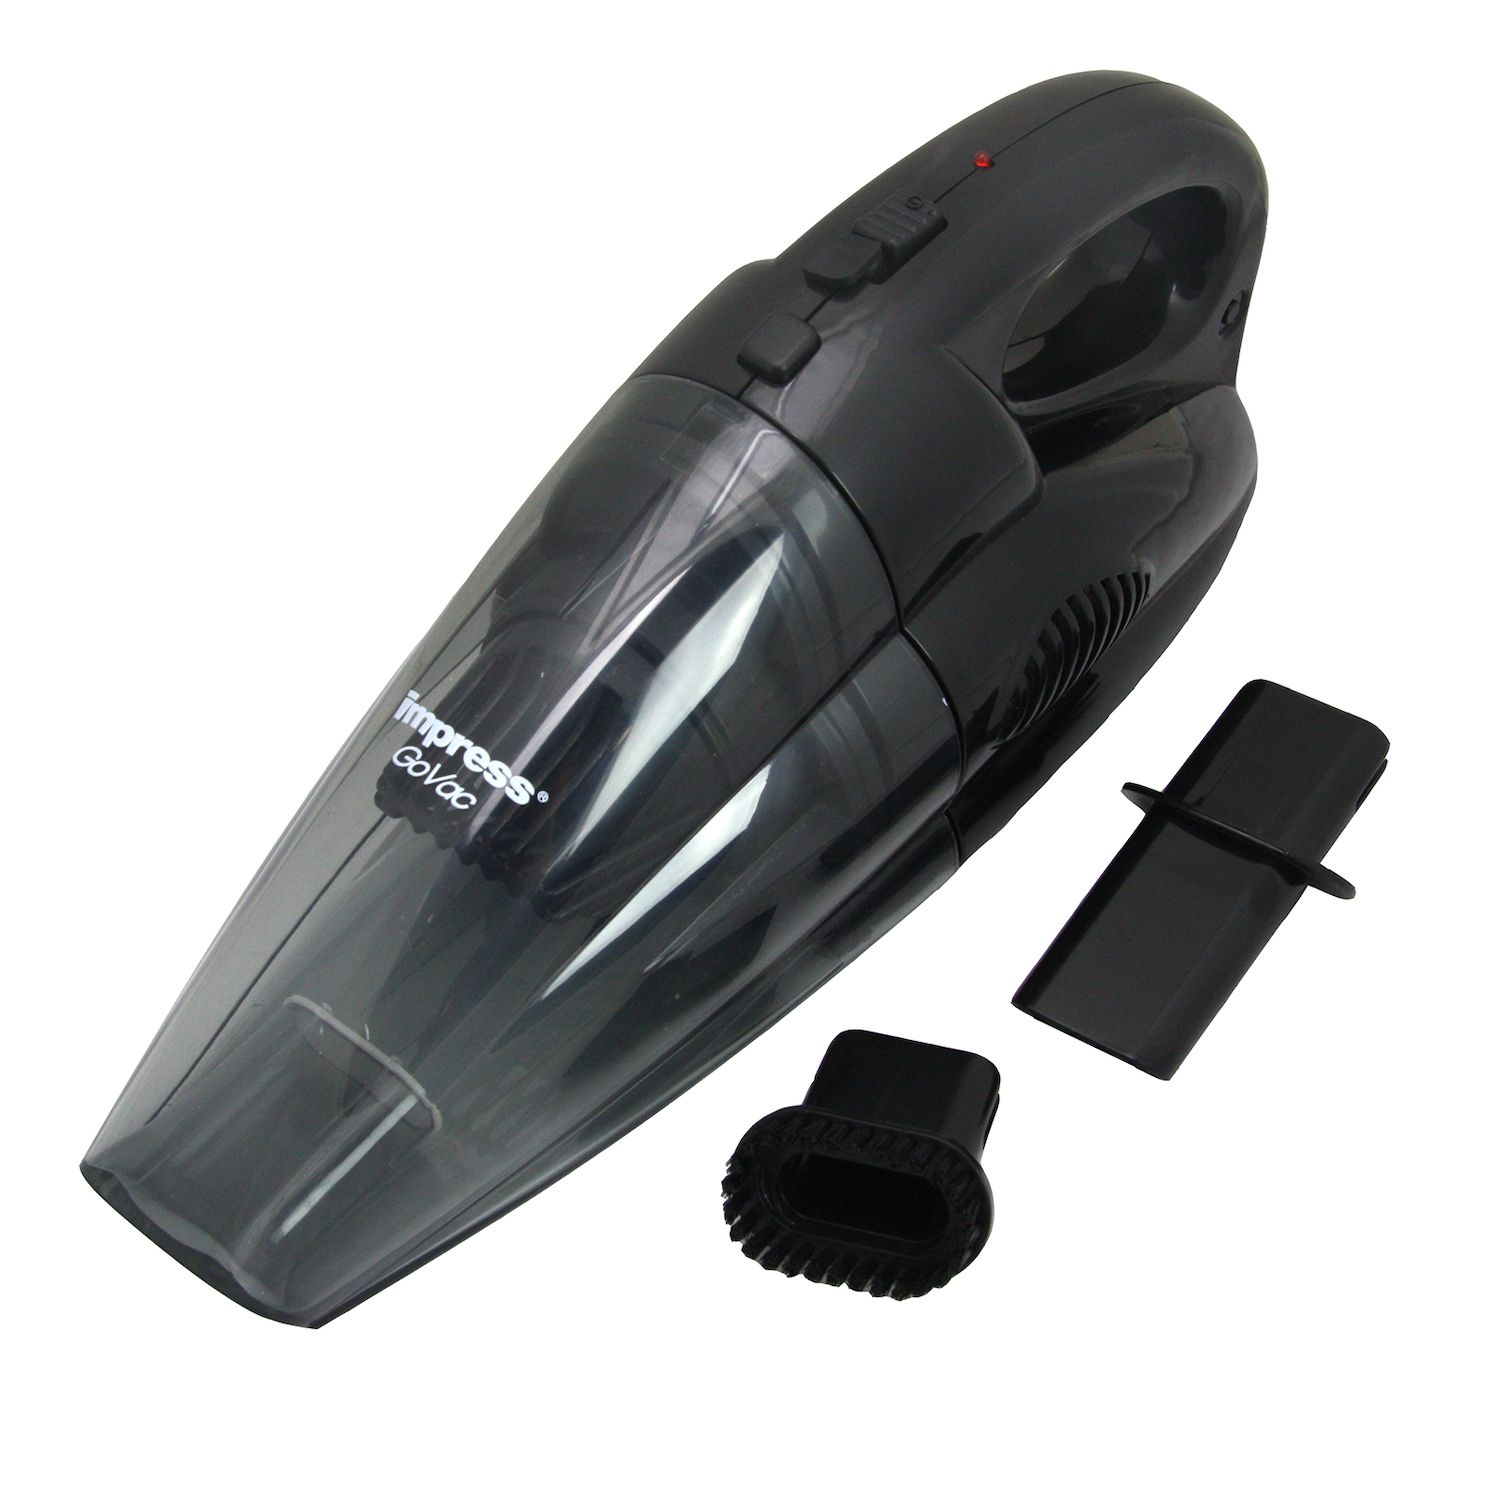 Ionvac Turbo Car VAC, Compact Cordless Handheld Vacuum Cleaner for Car and Travel, Black